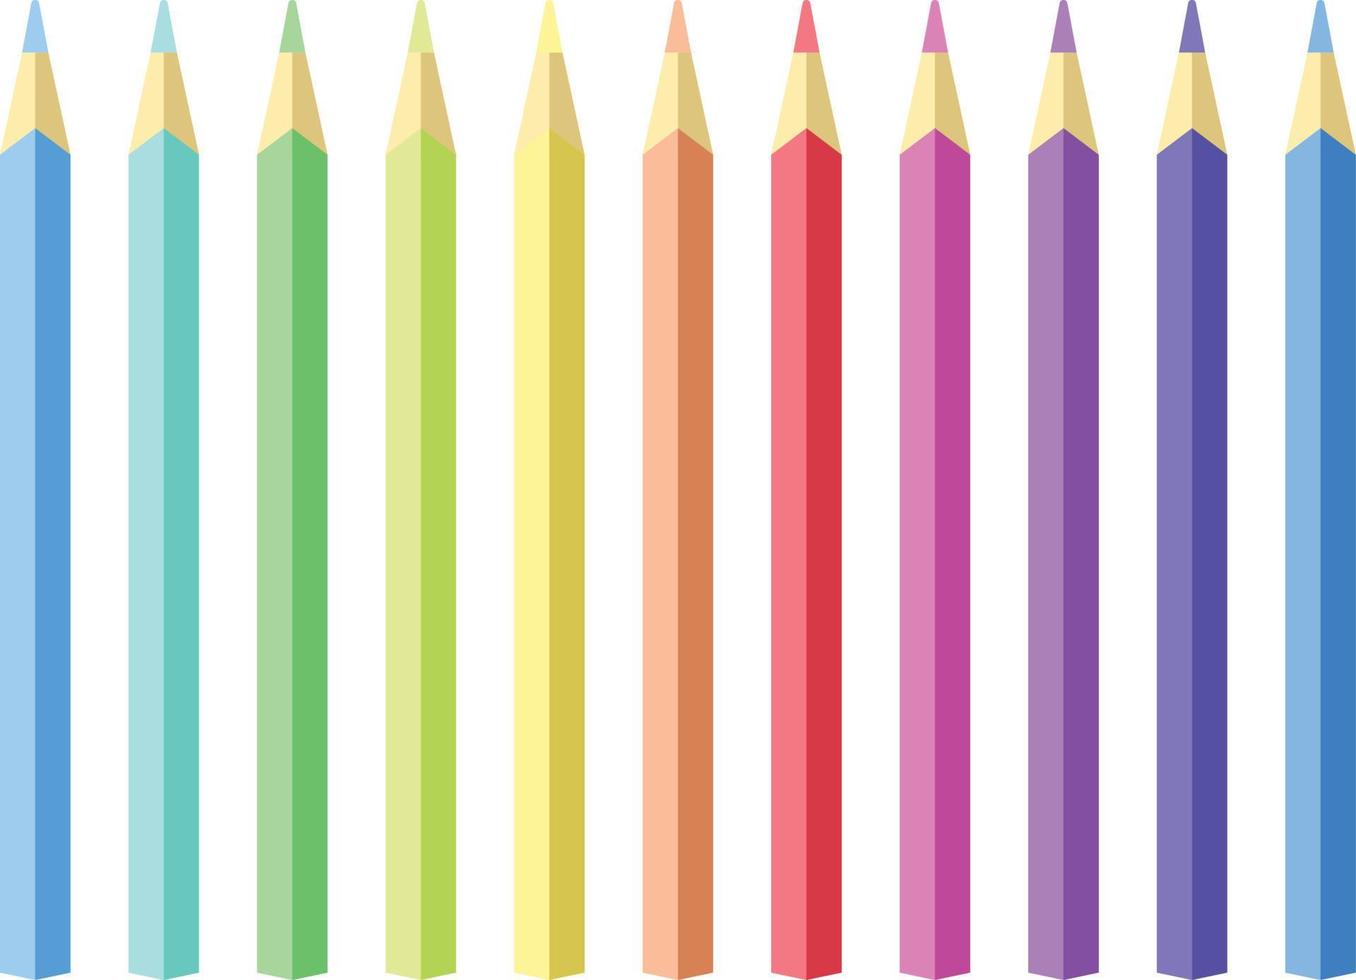 Colored pencil flat vector icon